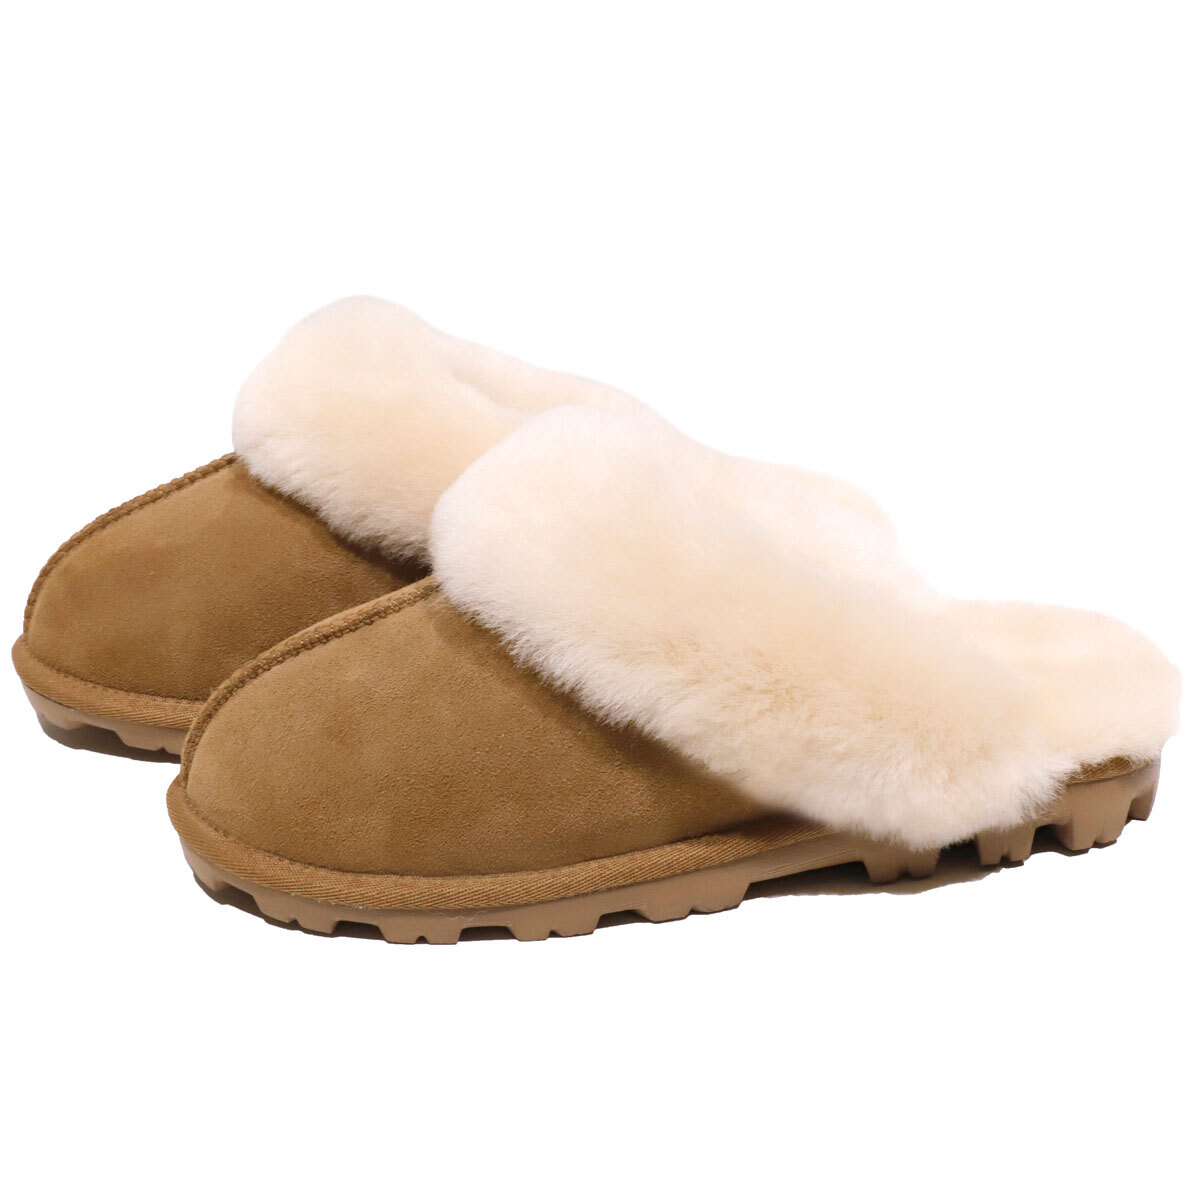 costco kirkland slippers